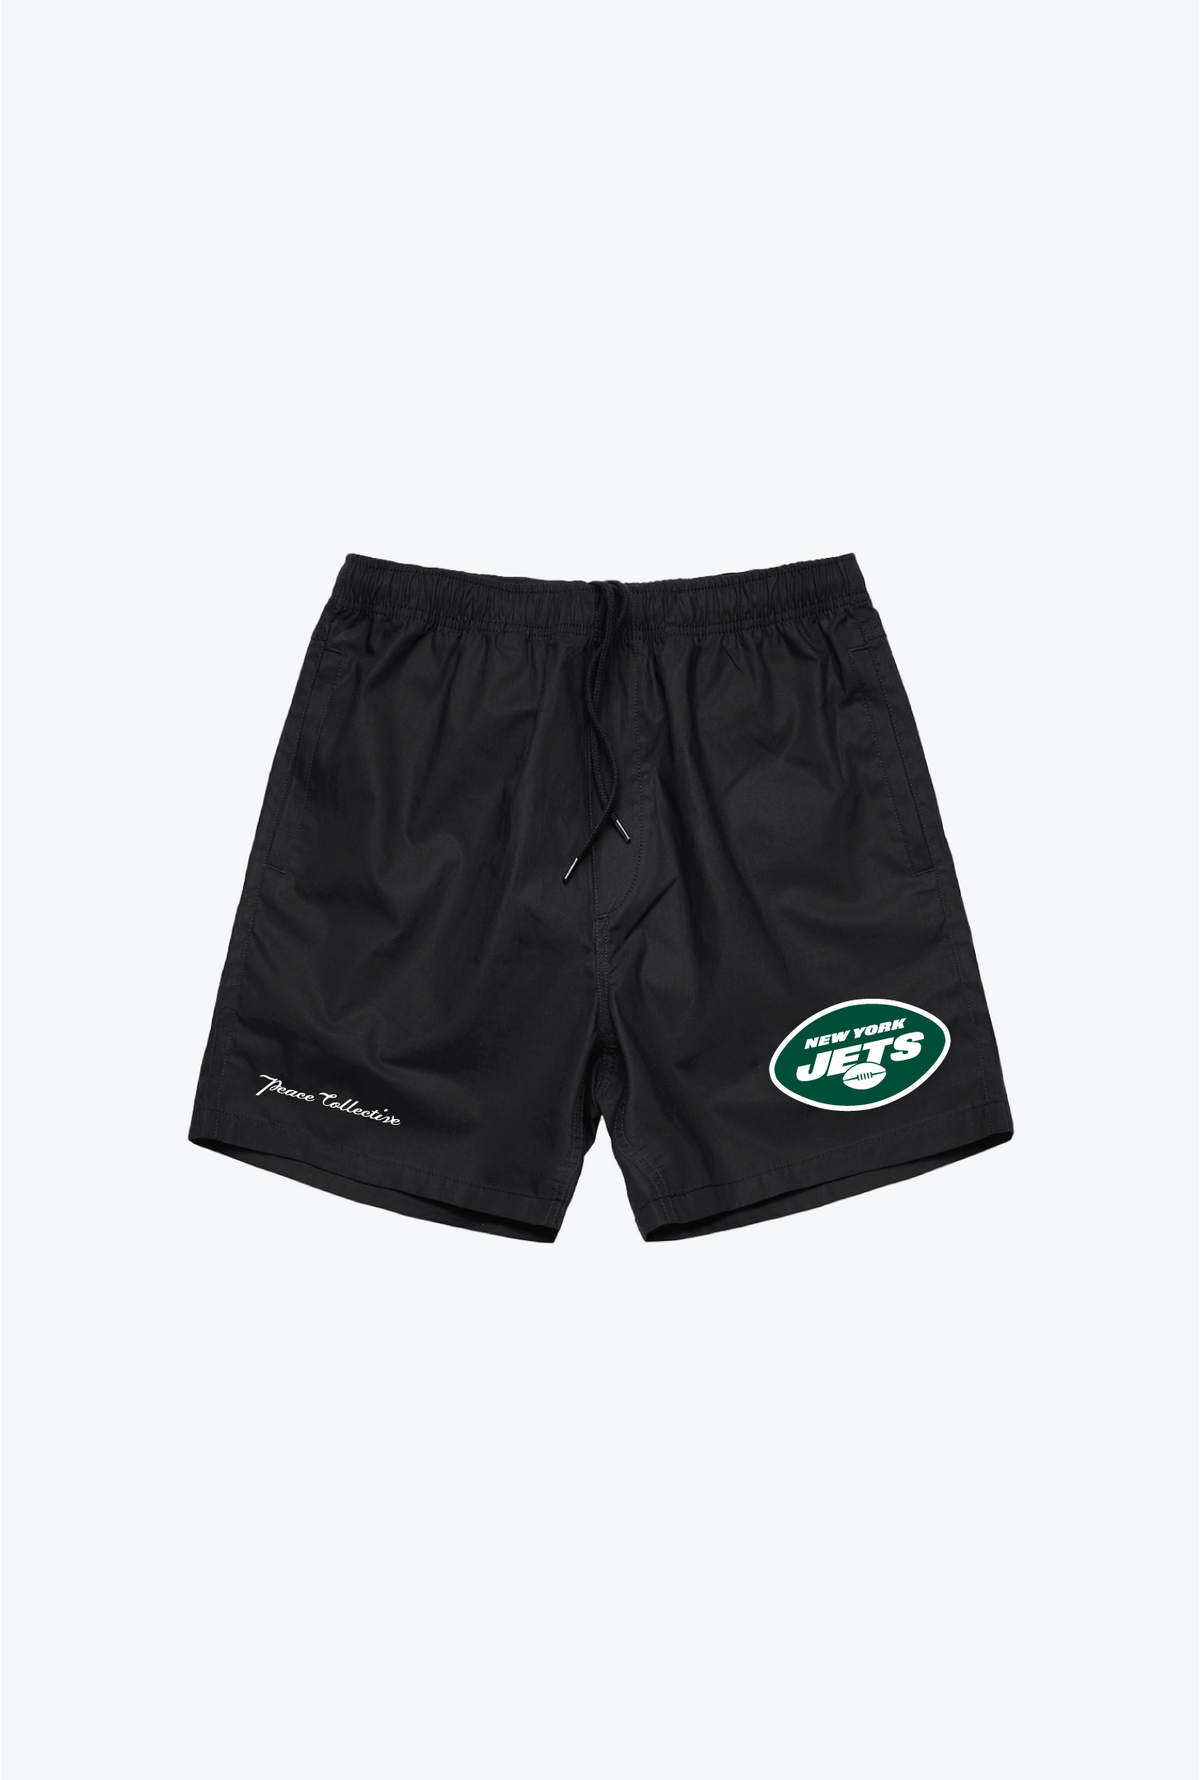 New York Jets Board Shorts - Black